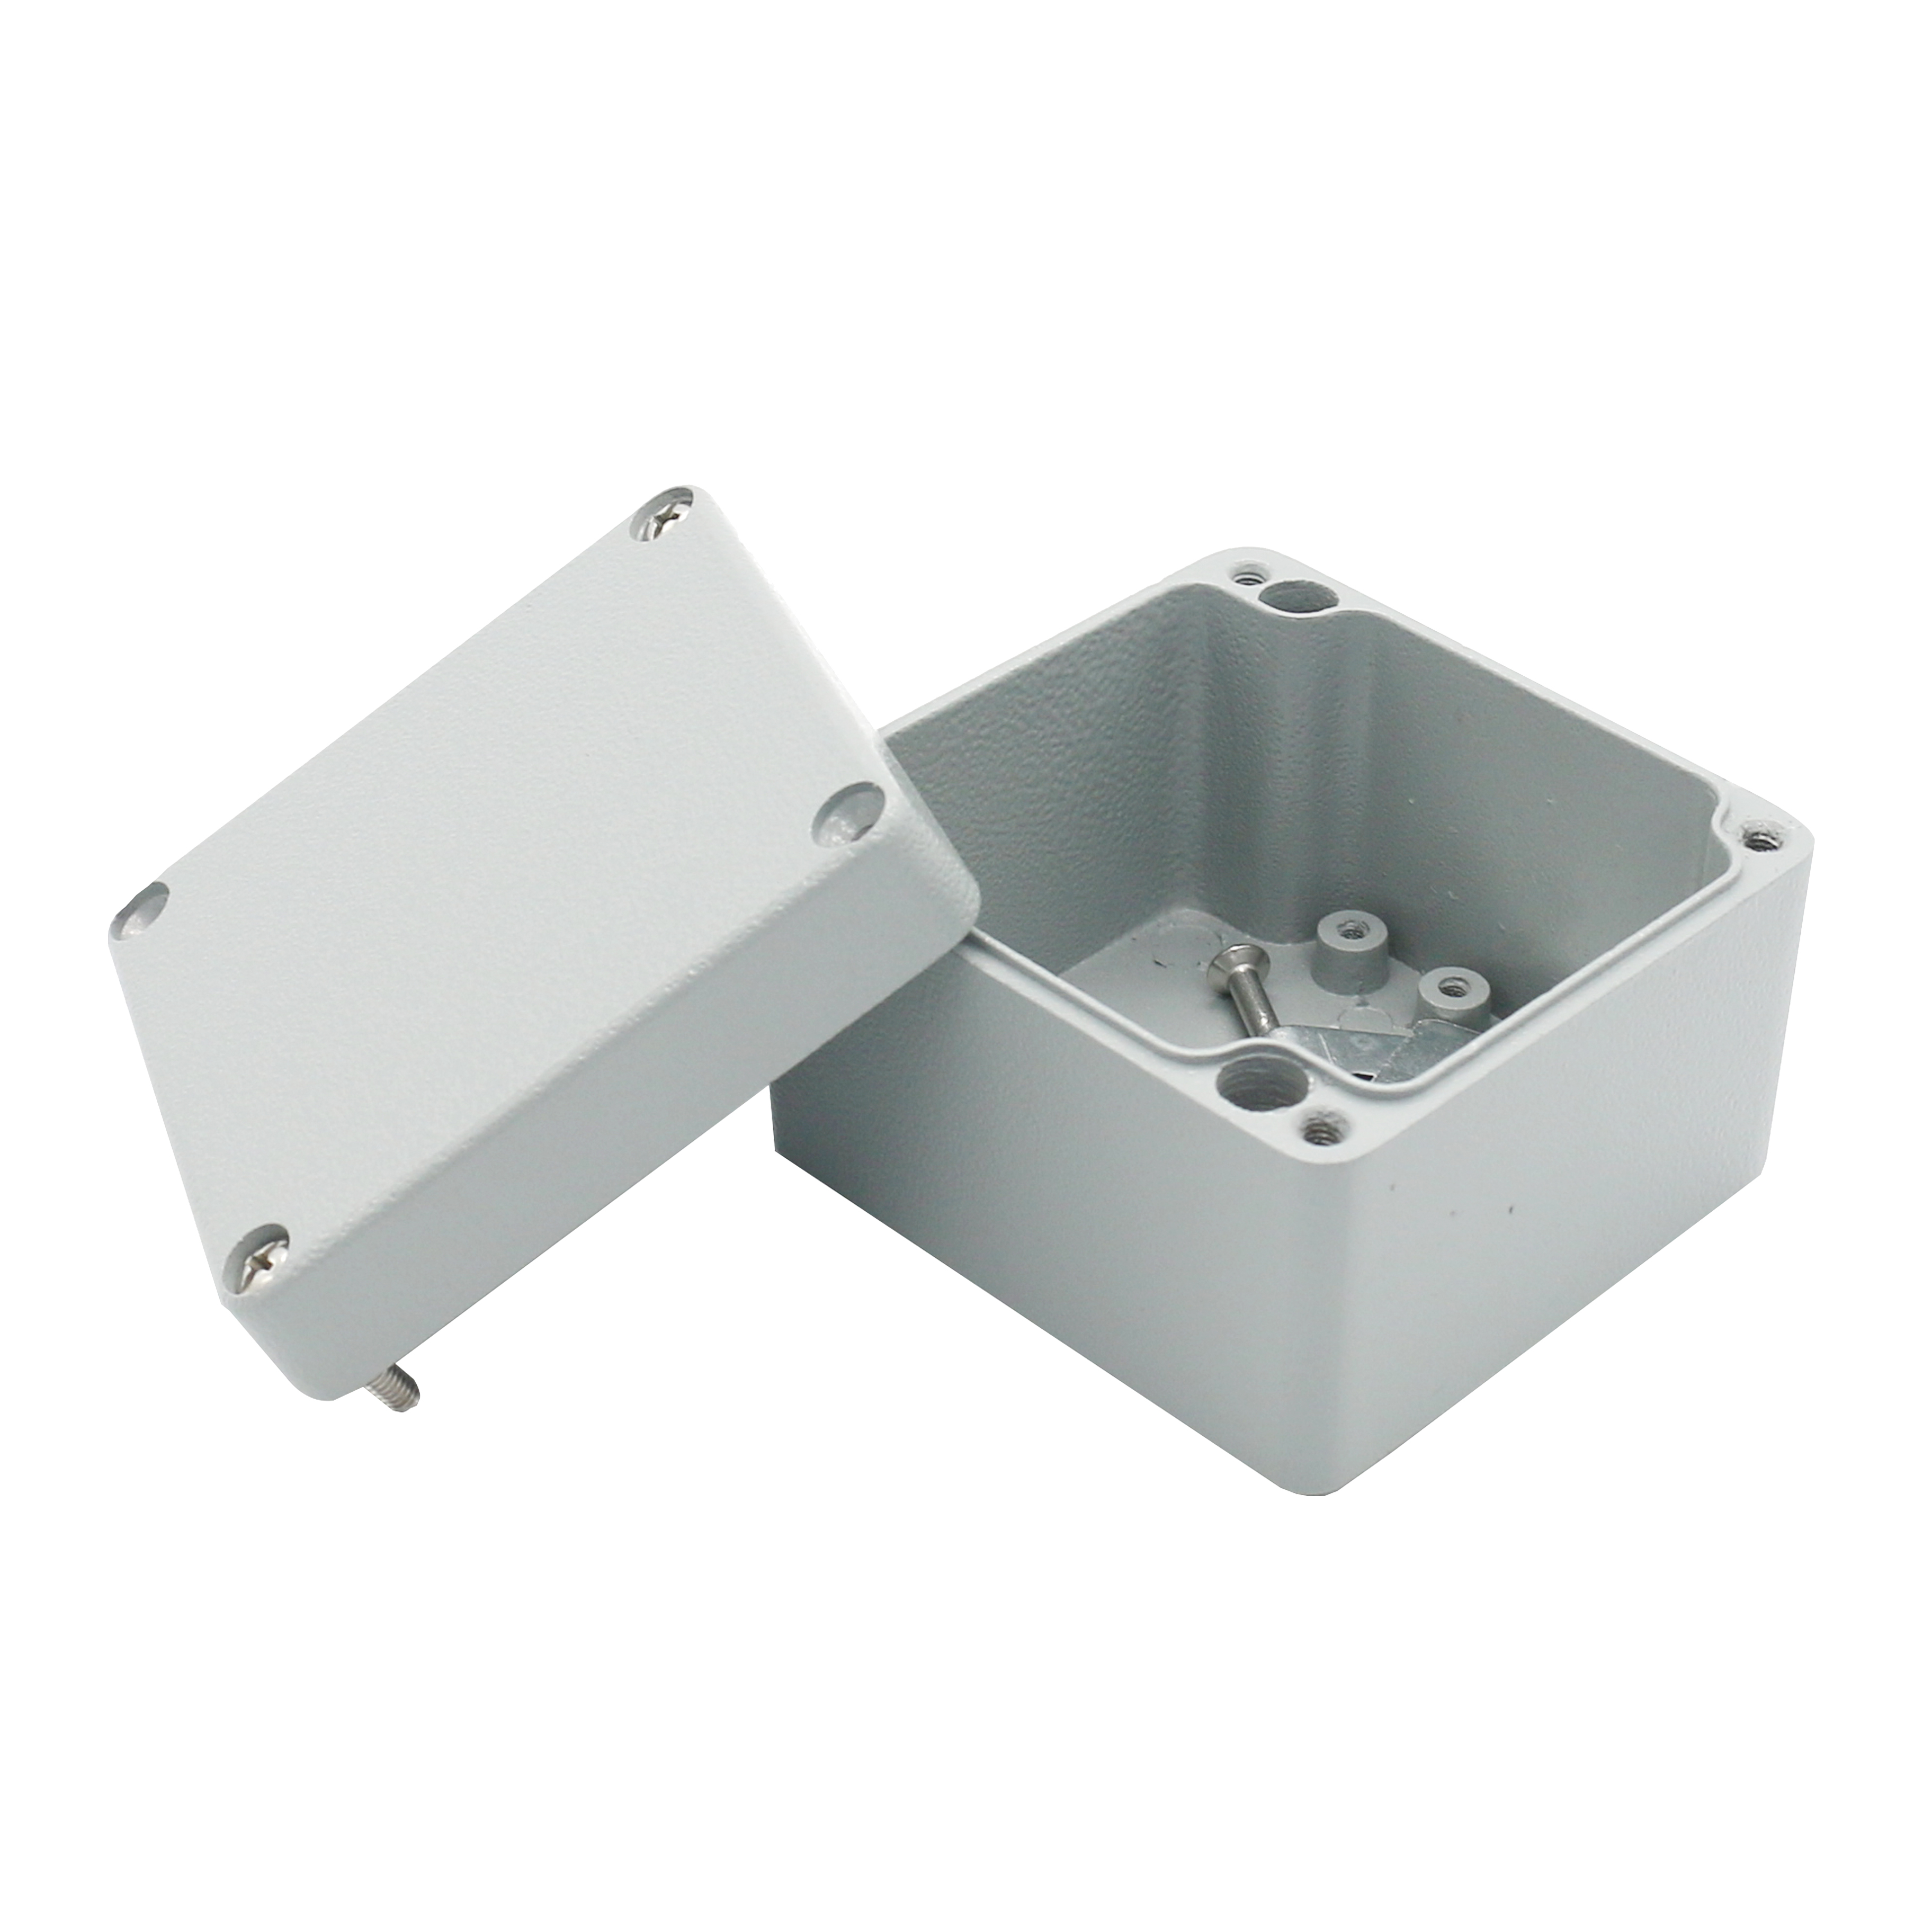 SAIPWELL 80*76*57 mm Aluminum Electrical Switch Box